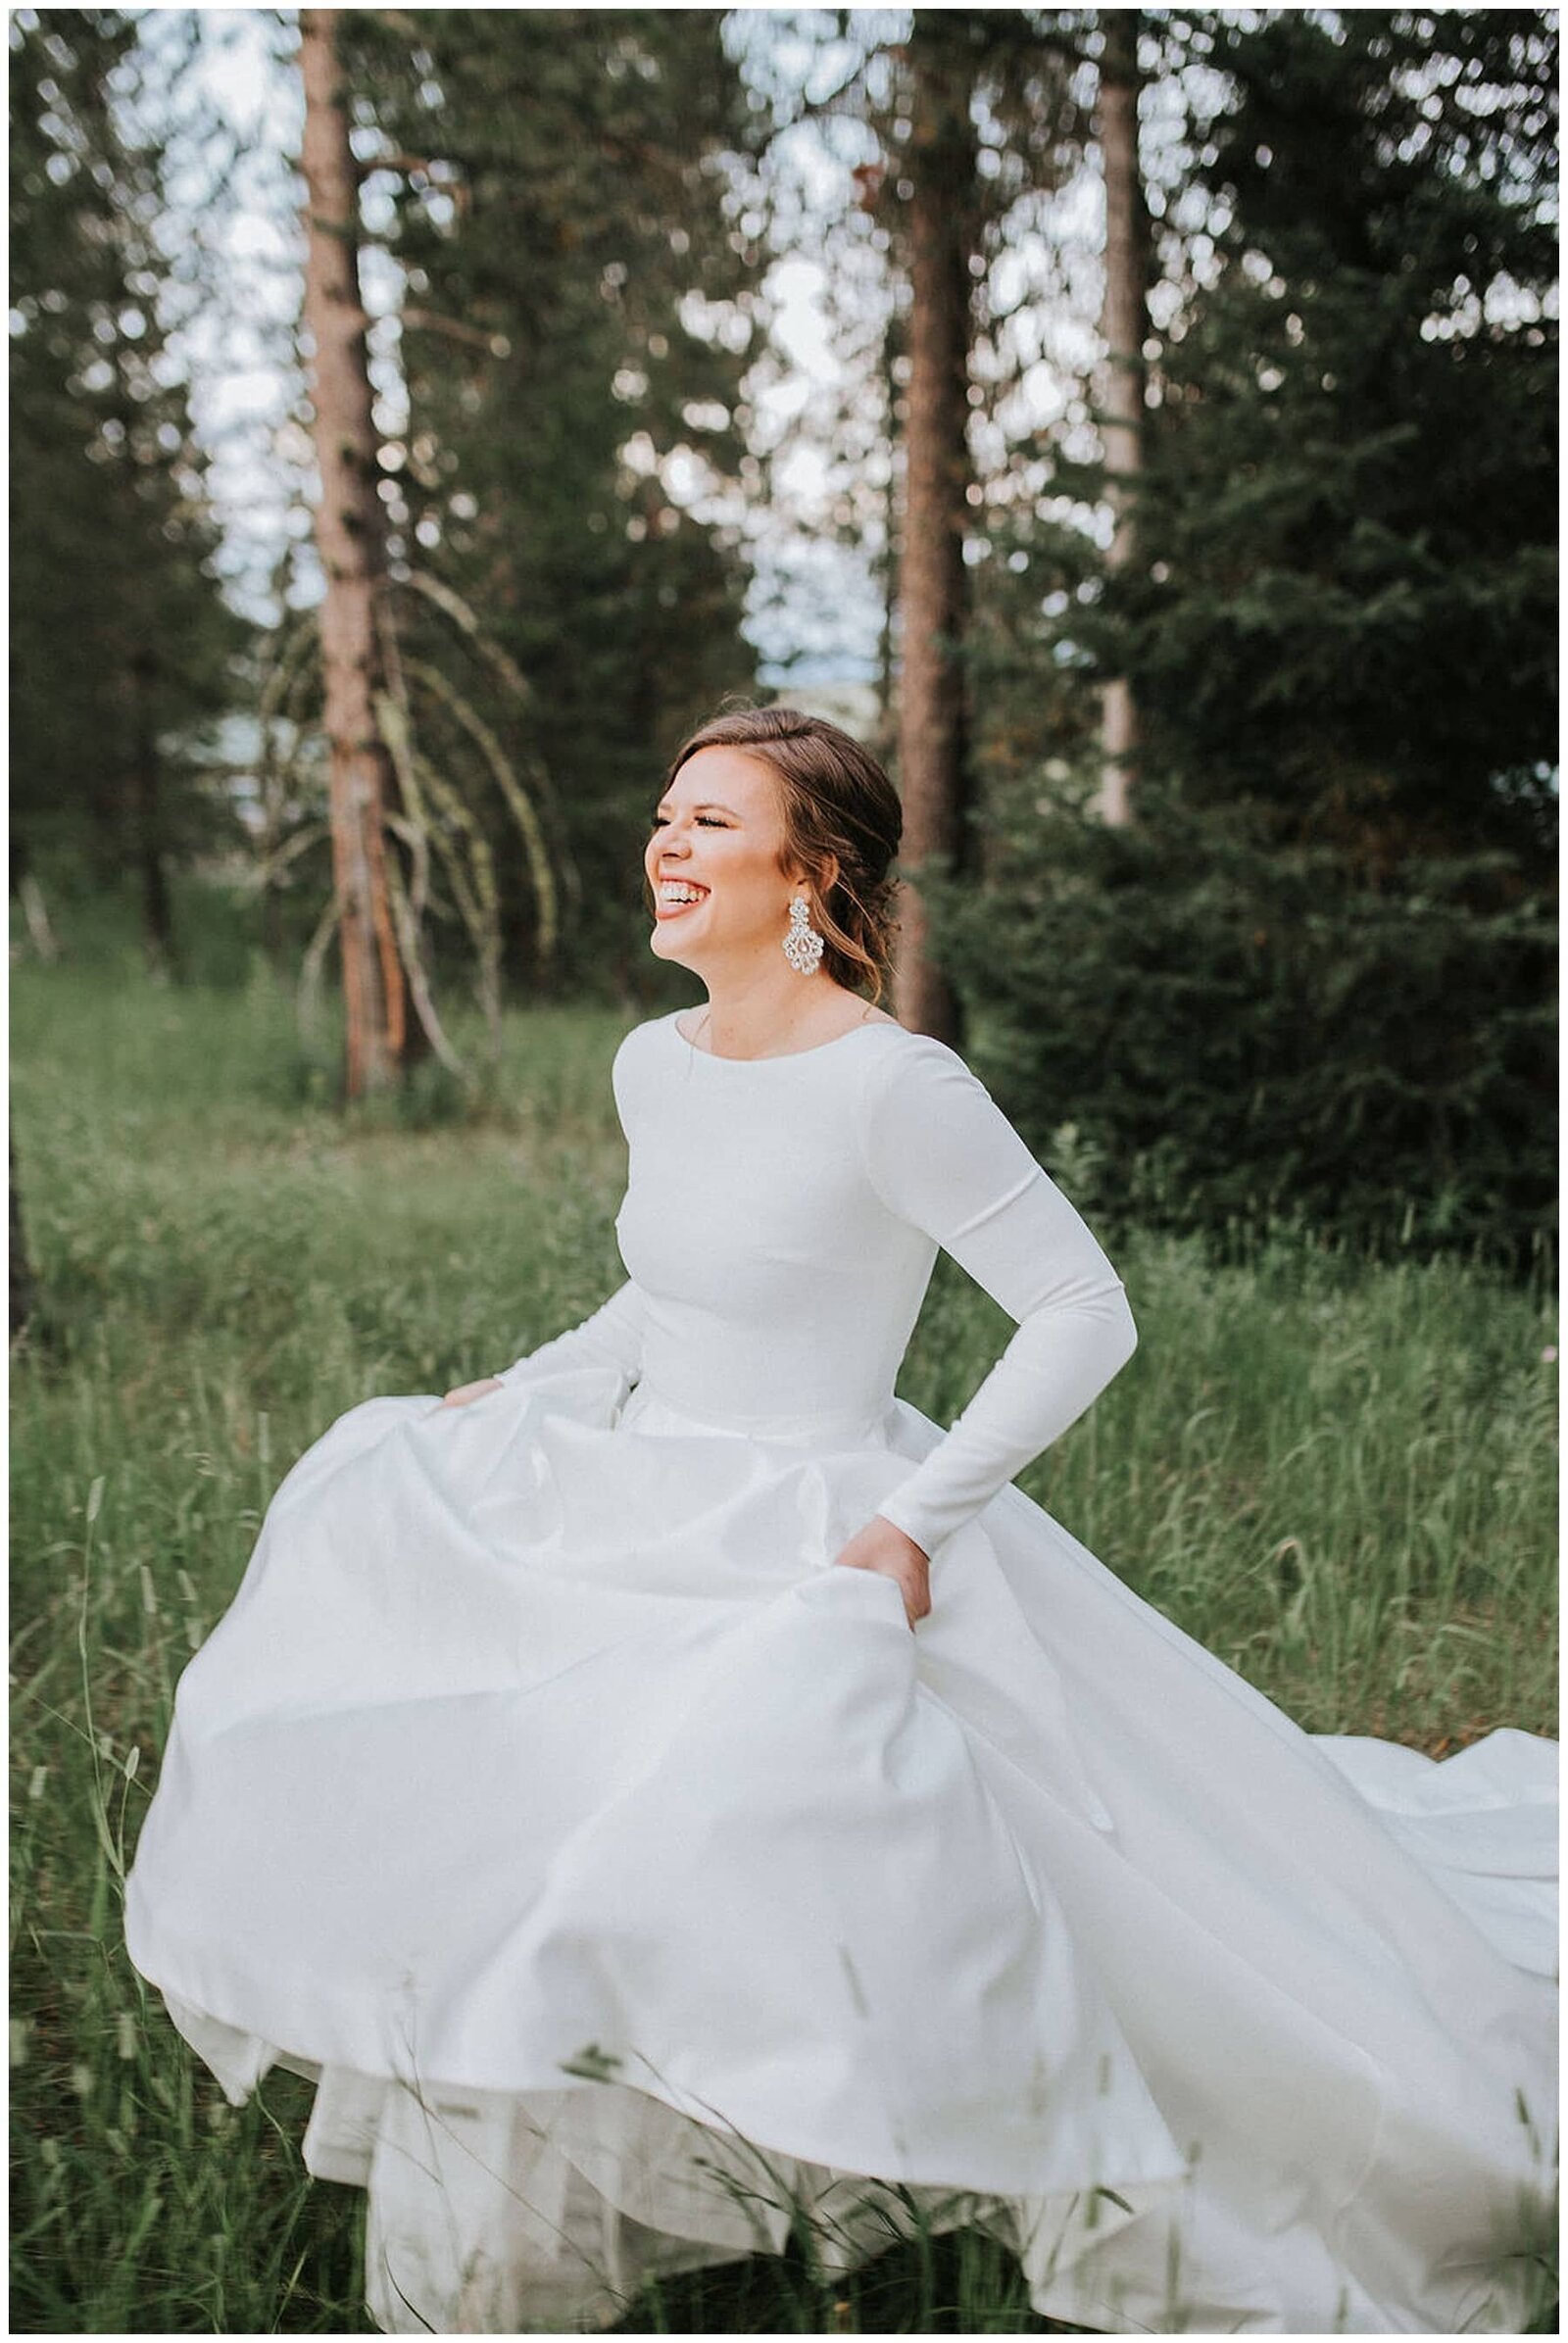 Sacramento Wedding Photographer captures bride running through field after beach wedding